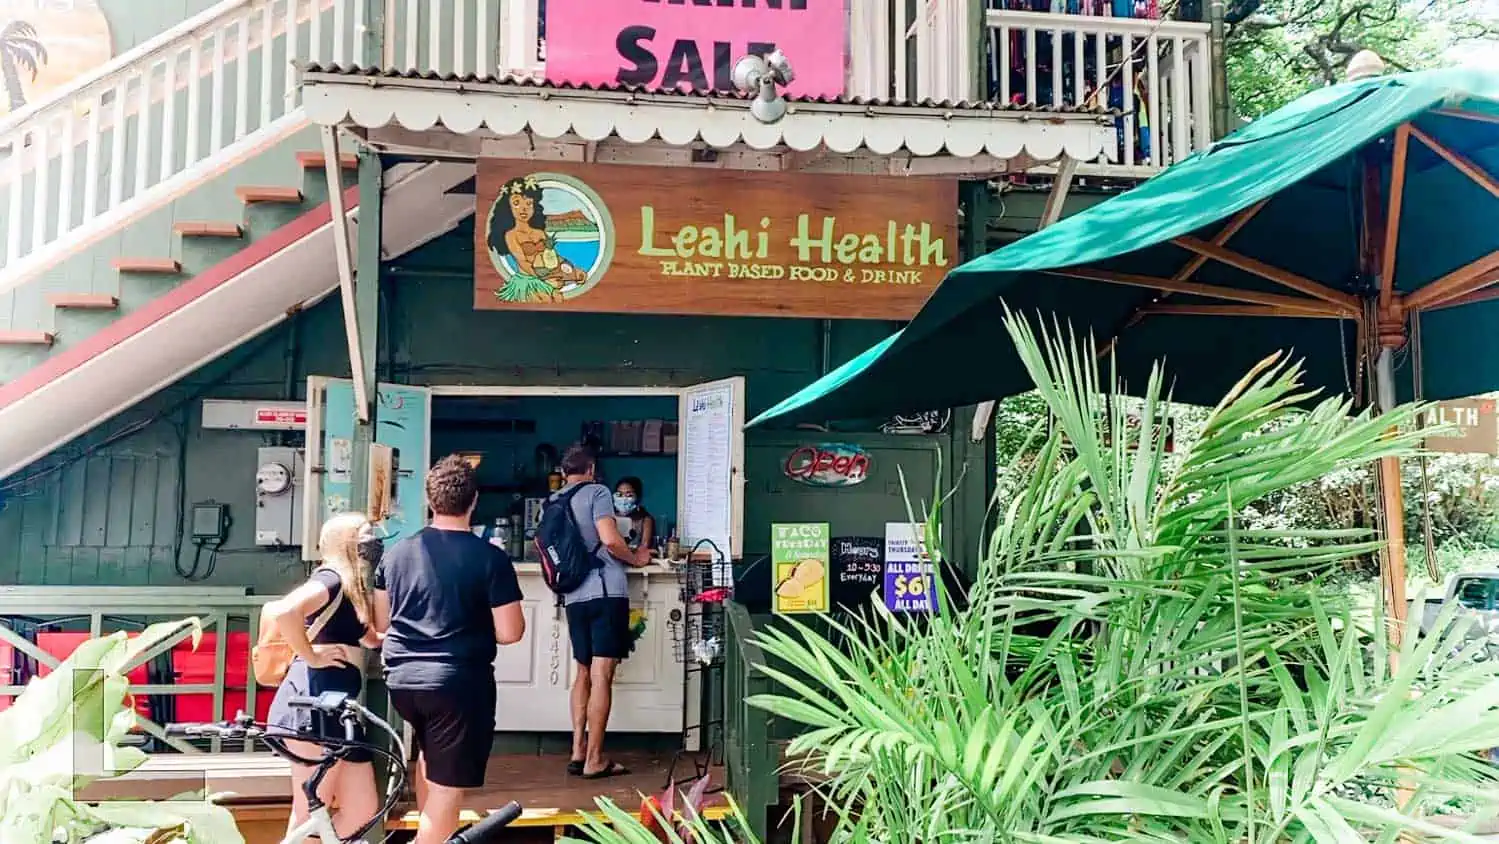 Leahi Health Smoothies Acai Bowls Grain Bowls and Vegan Food in South Shore Kauai